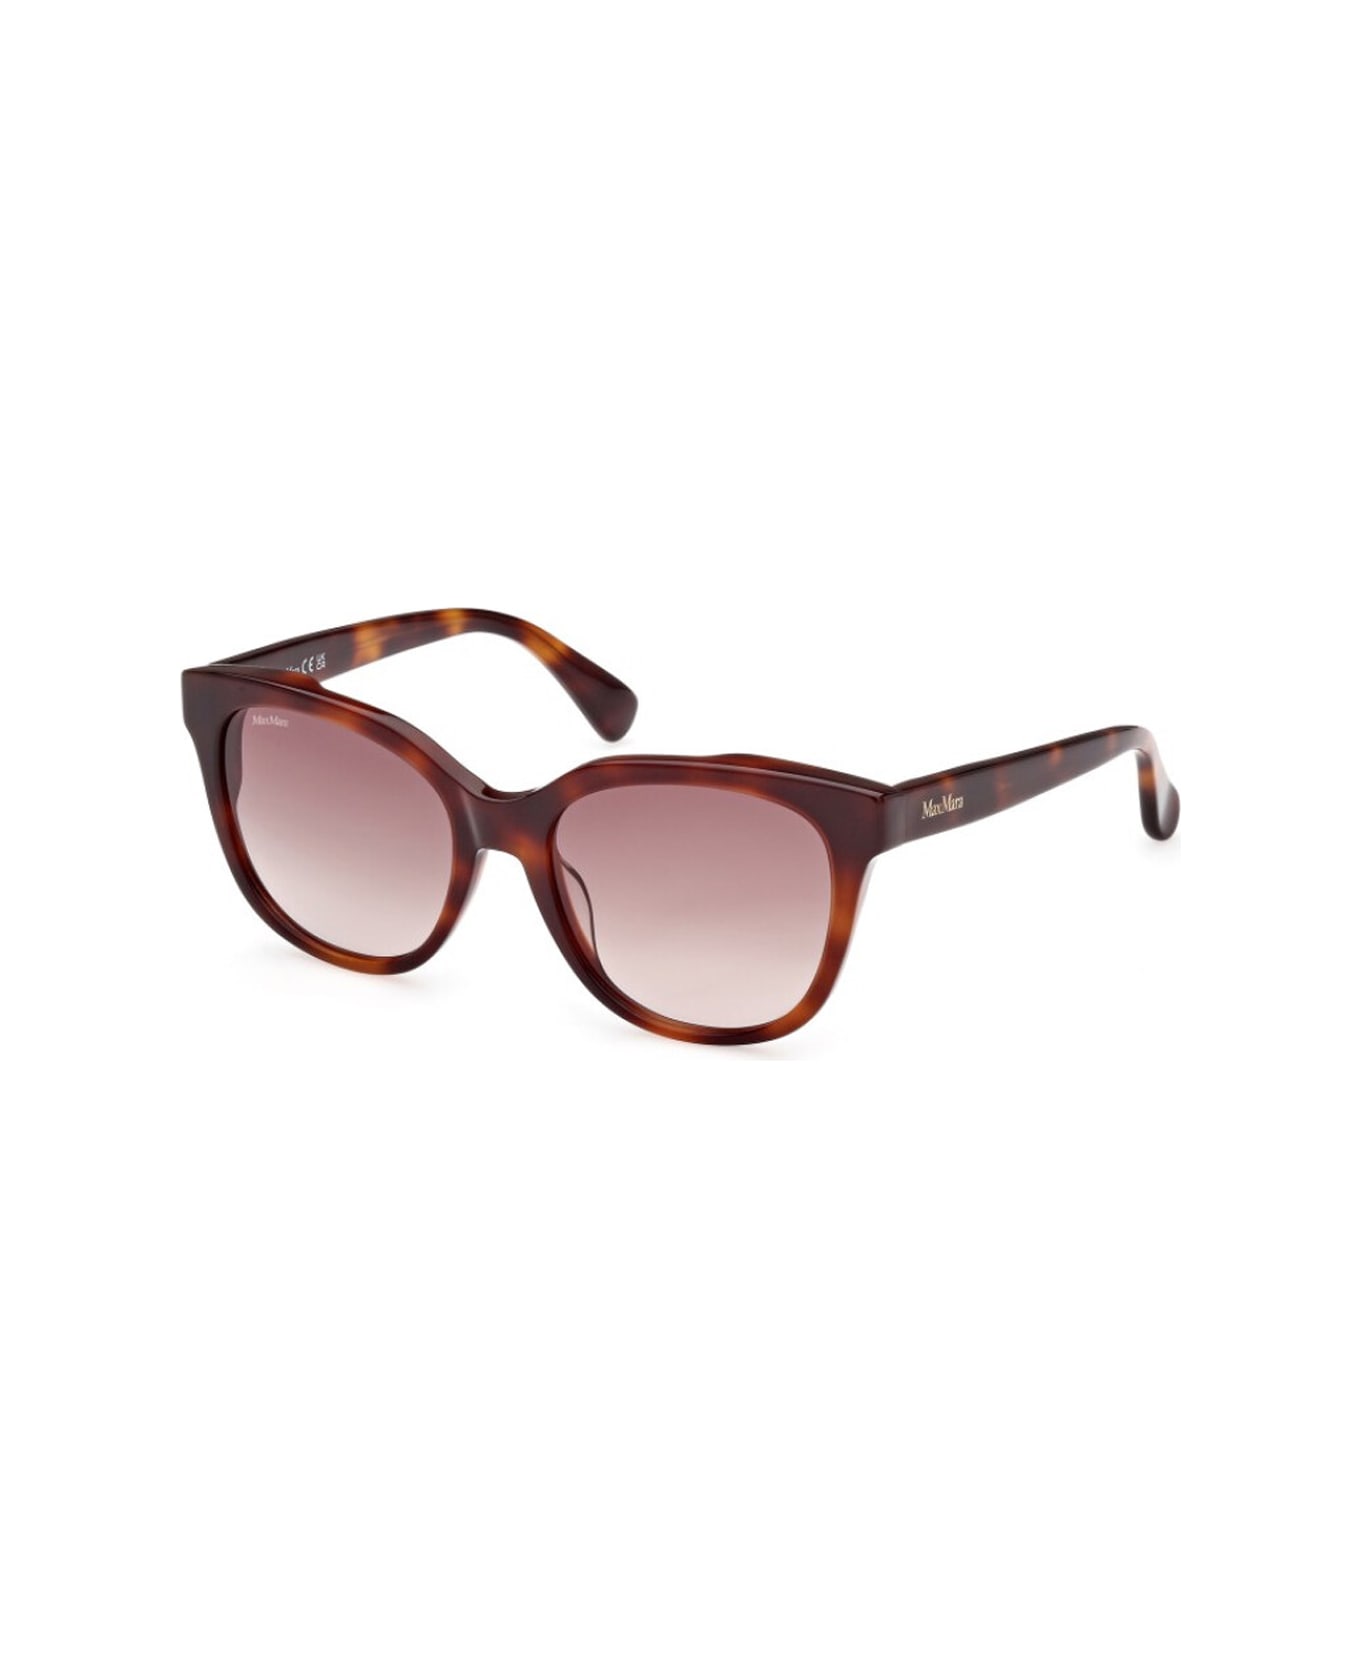 Max Mara Mm0068 52f Sunglasses - Marrone サングラス